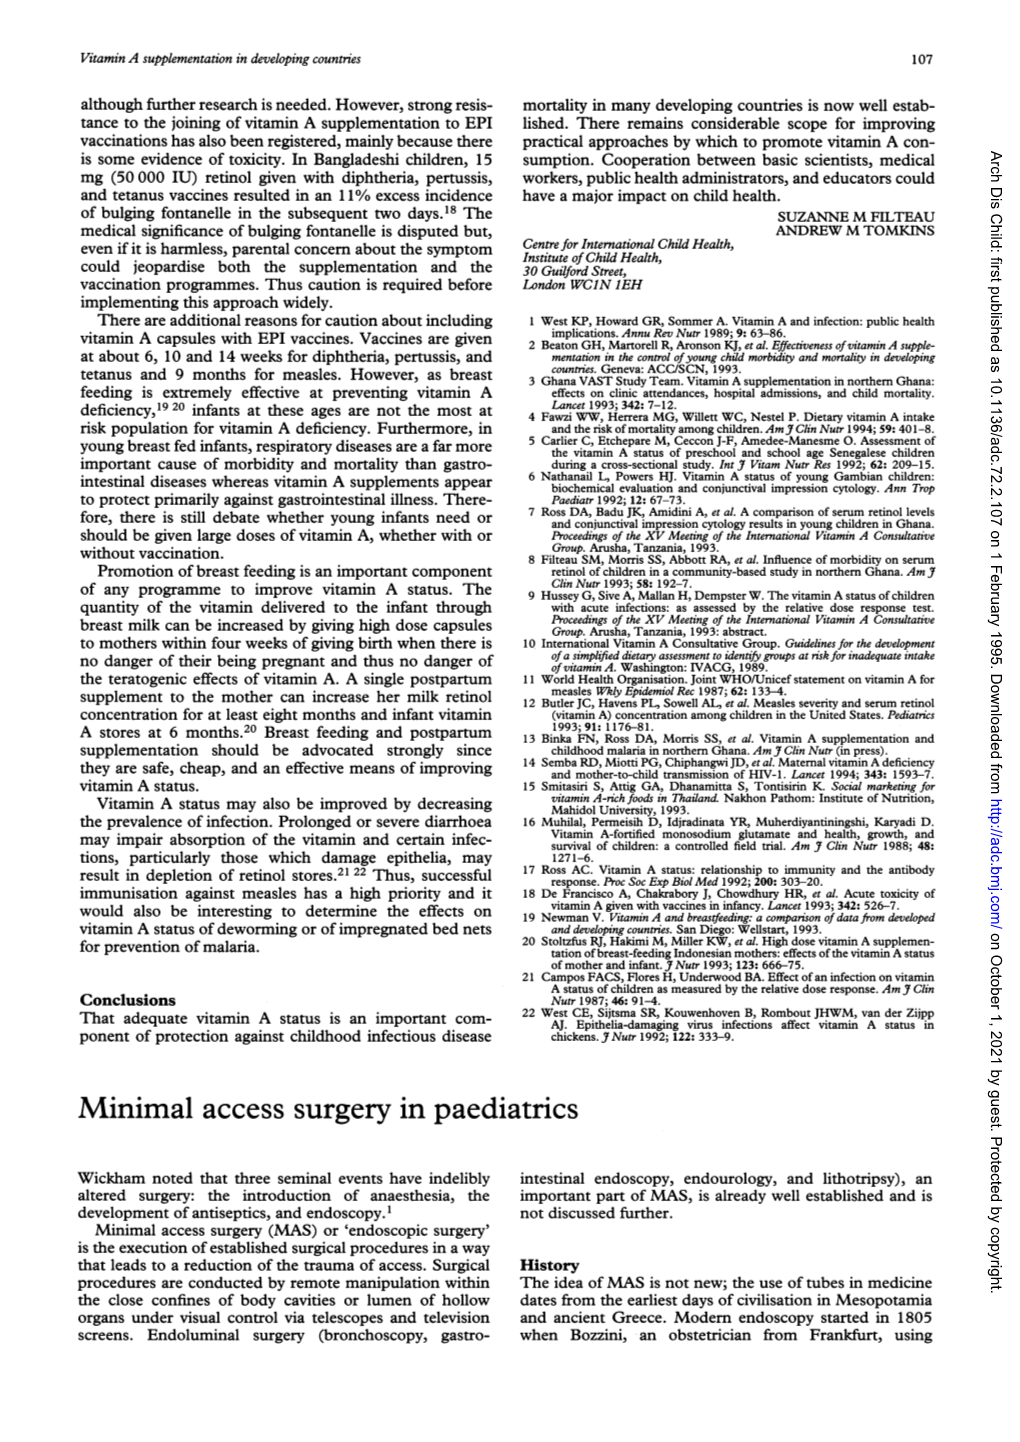 Minimal Access Surgery in Paediatrics